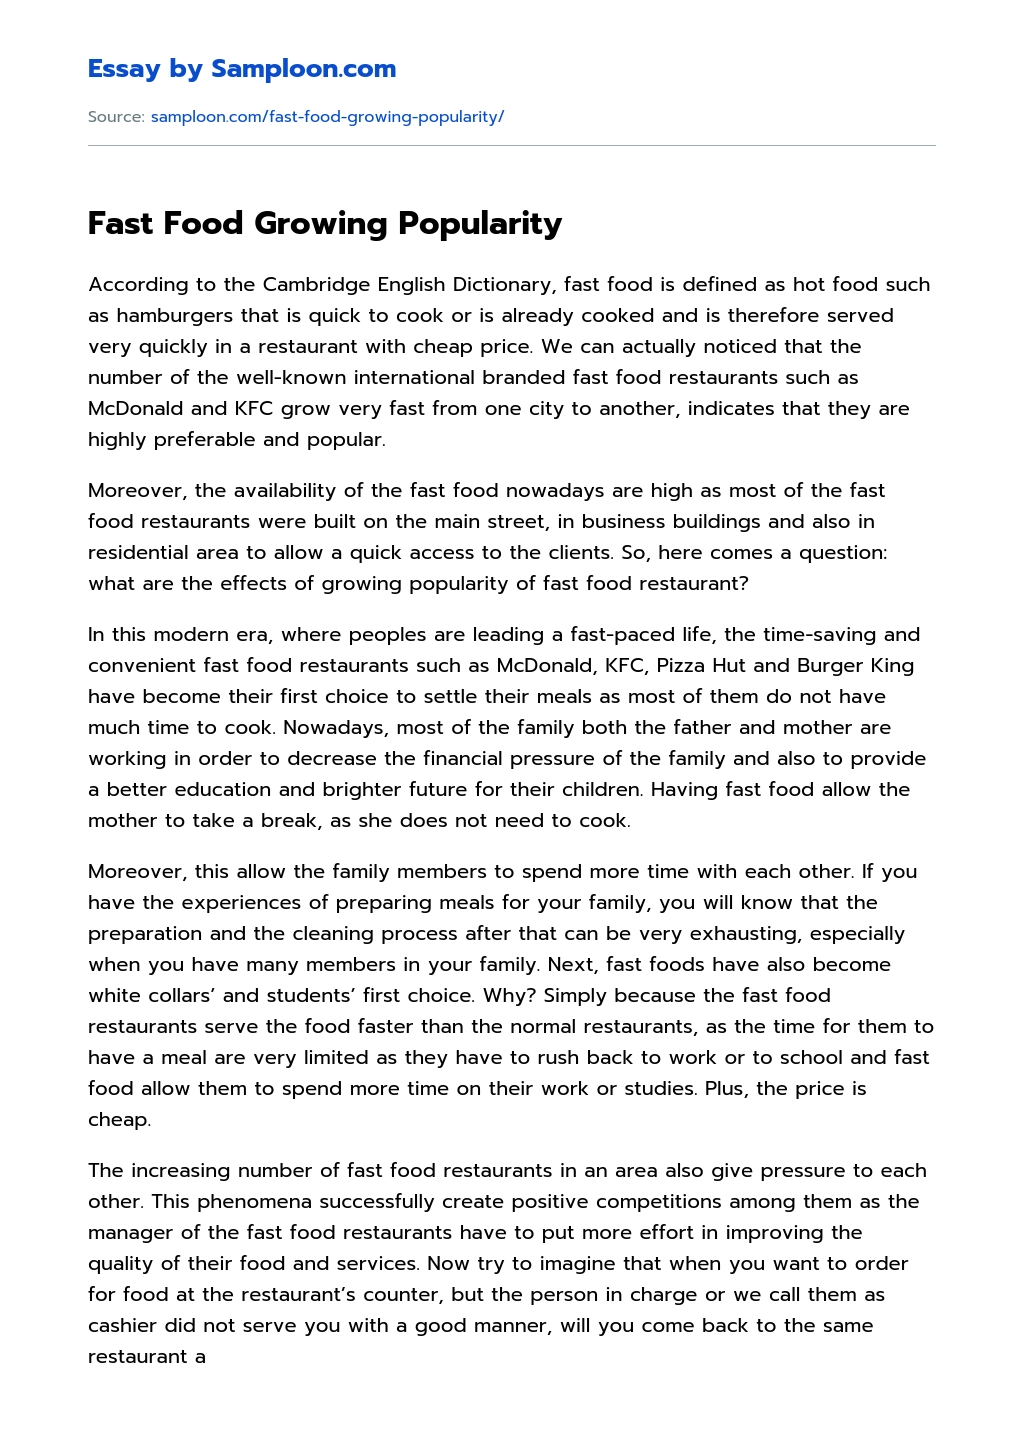 Fast Food Growing Popularity essay